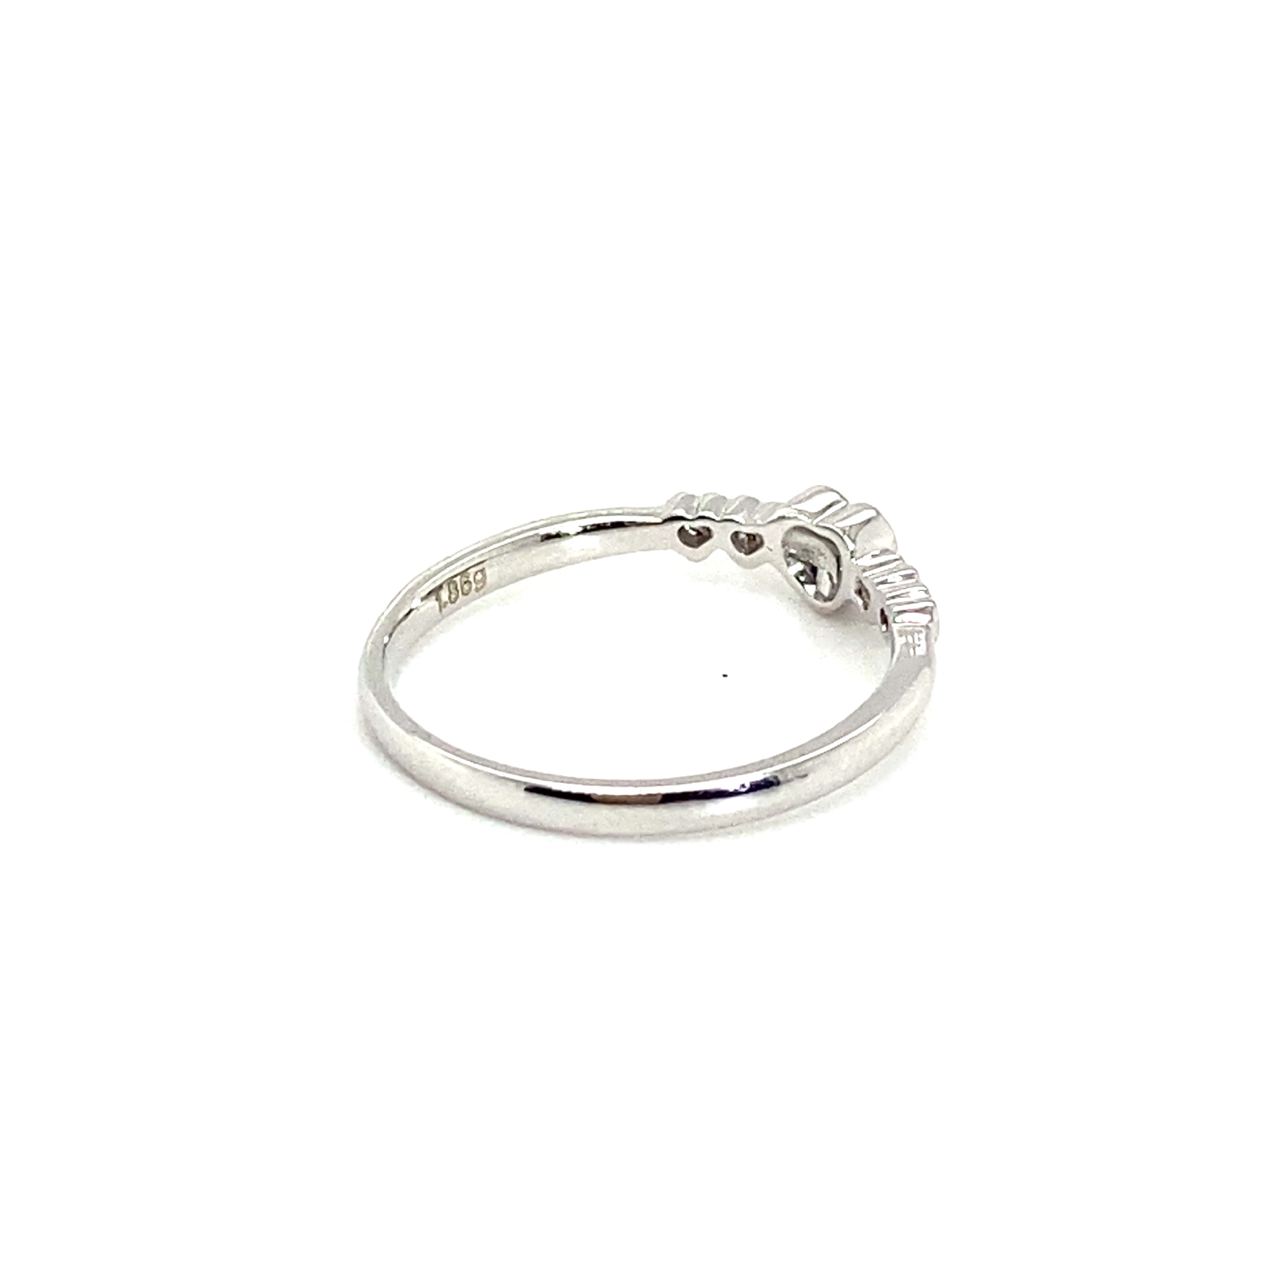 18K White Gold Mini Five Heart Diamond Ring